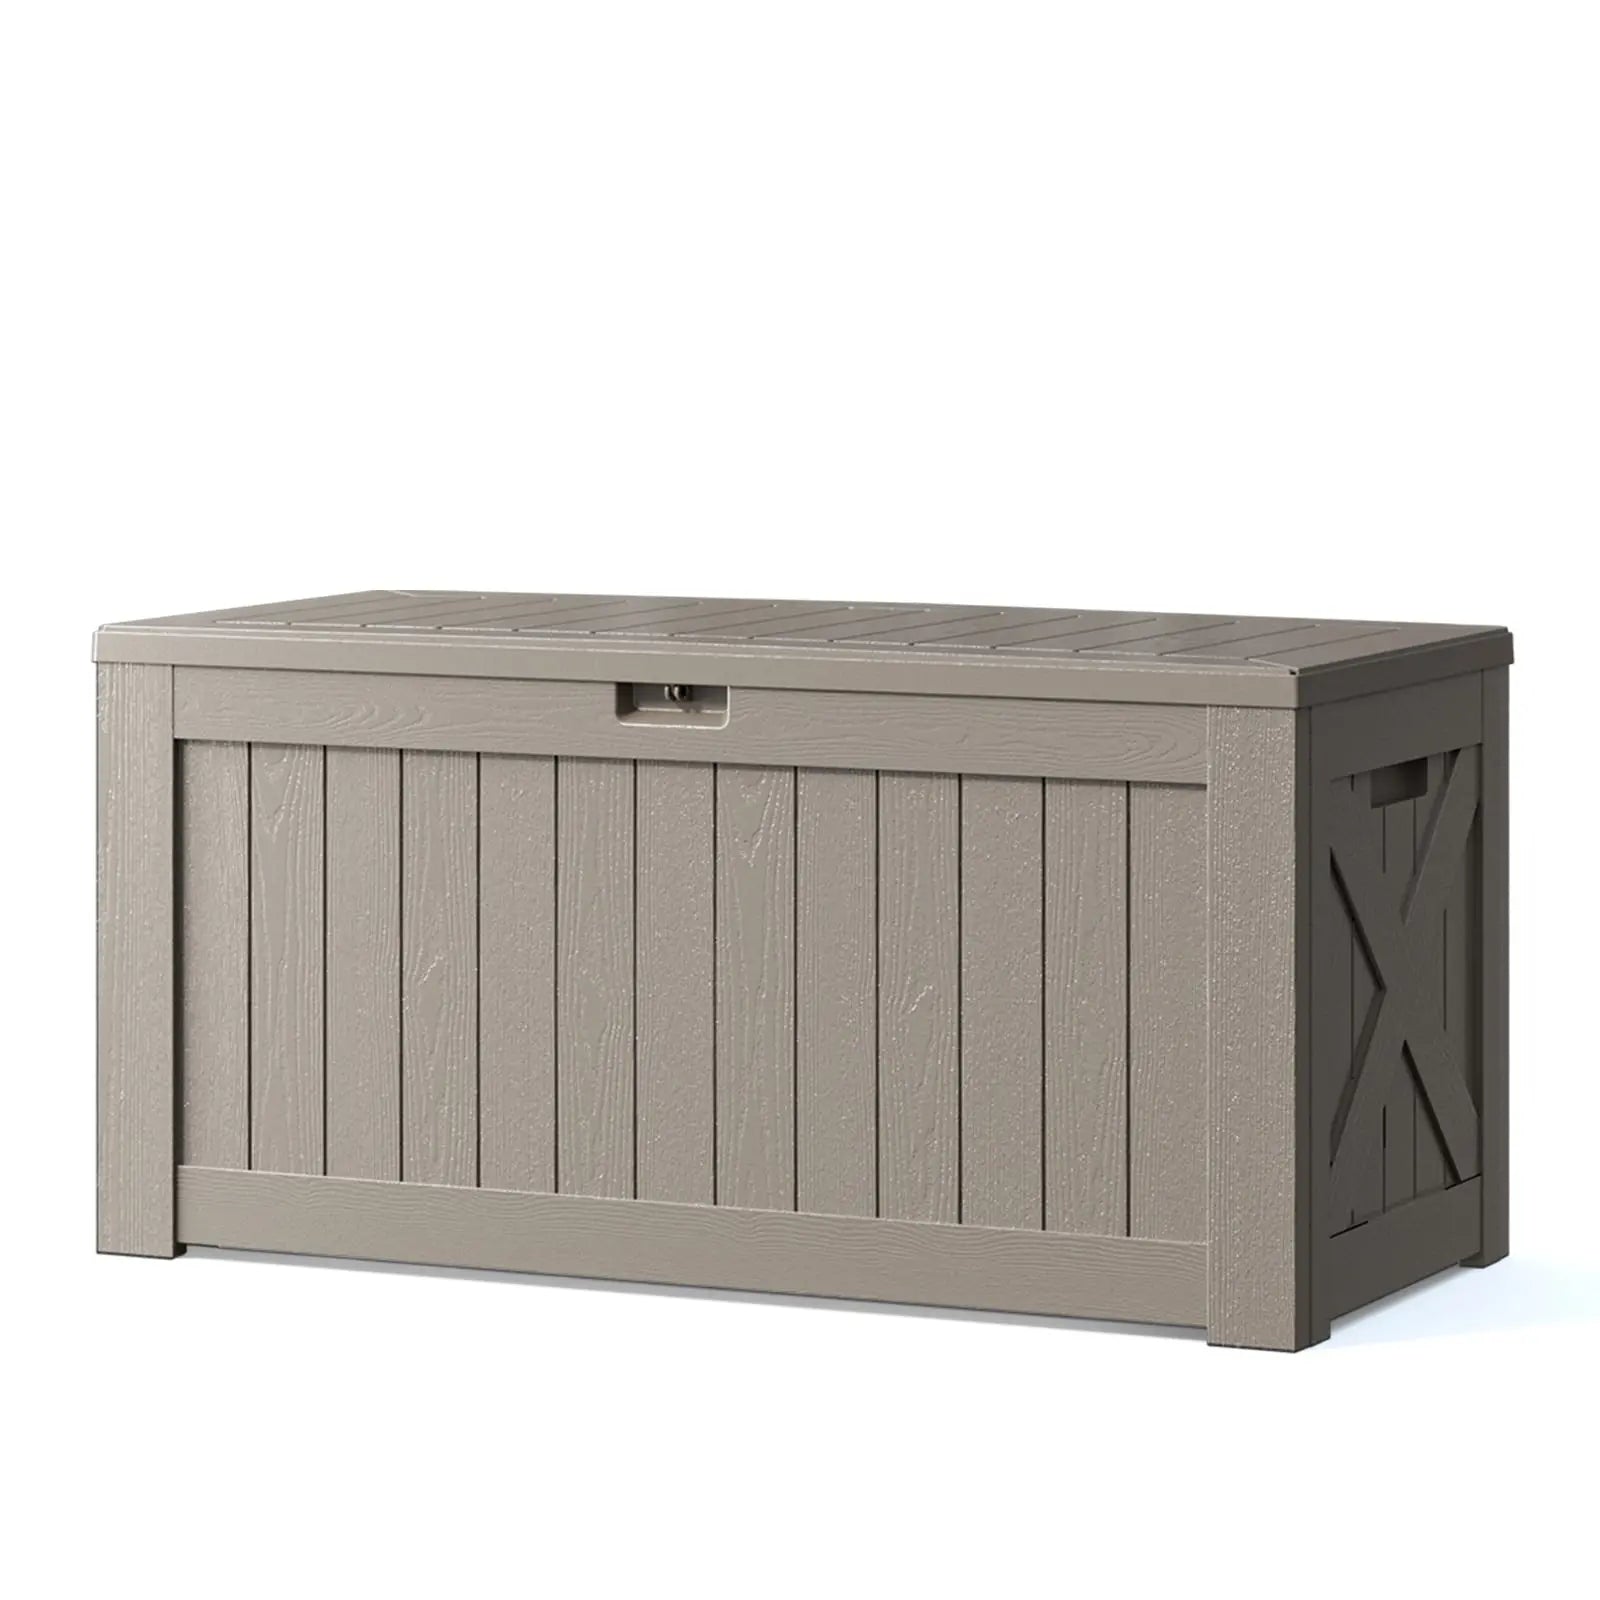 120 Gallon Deck Box Outdoor Storage Bin Patiowell